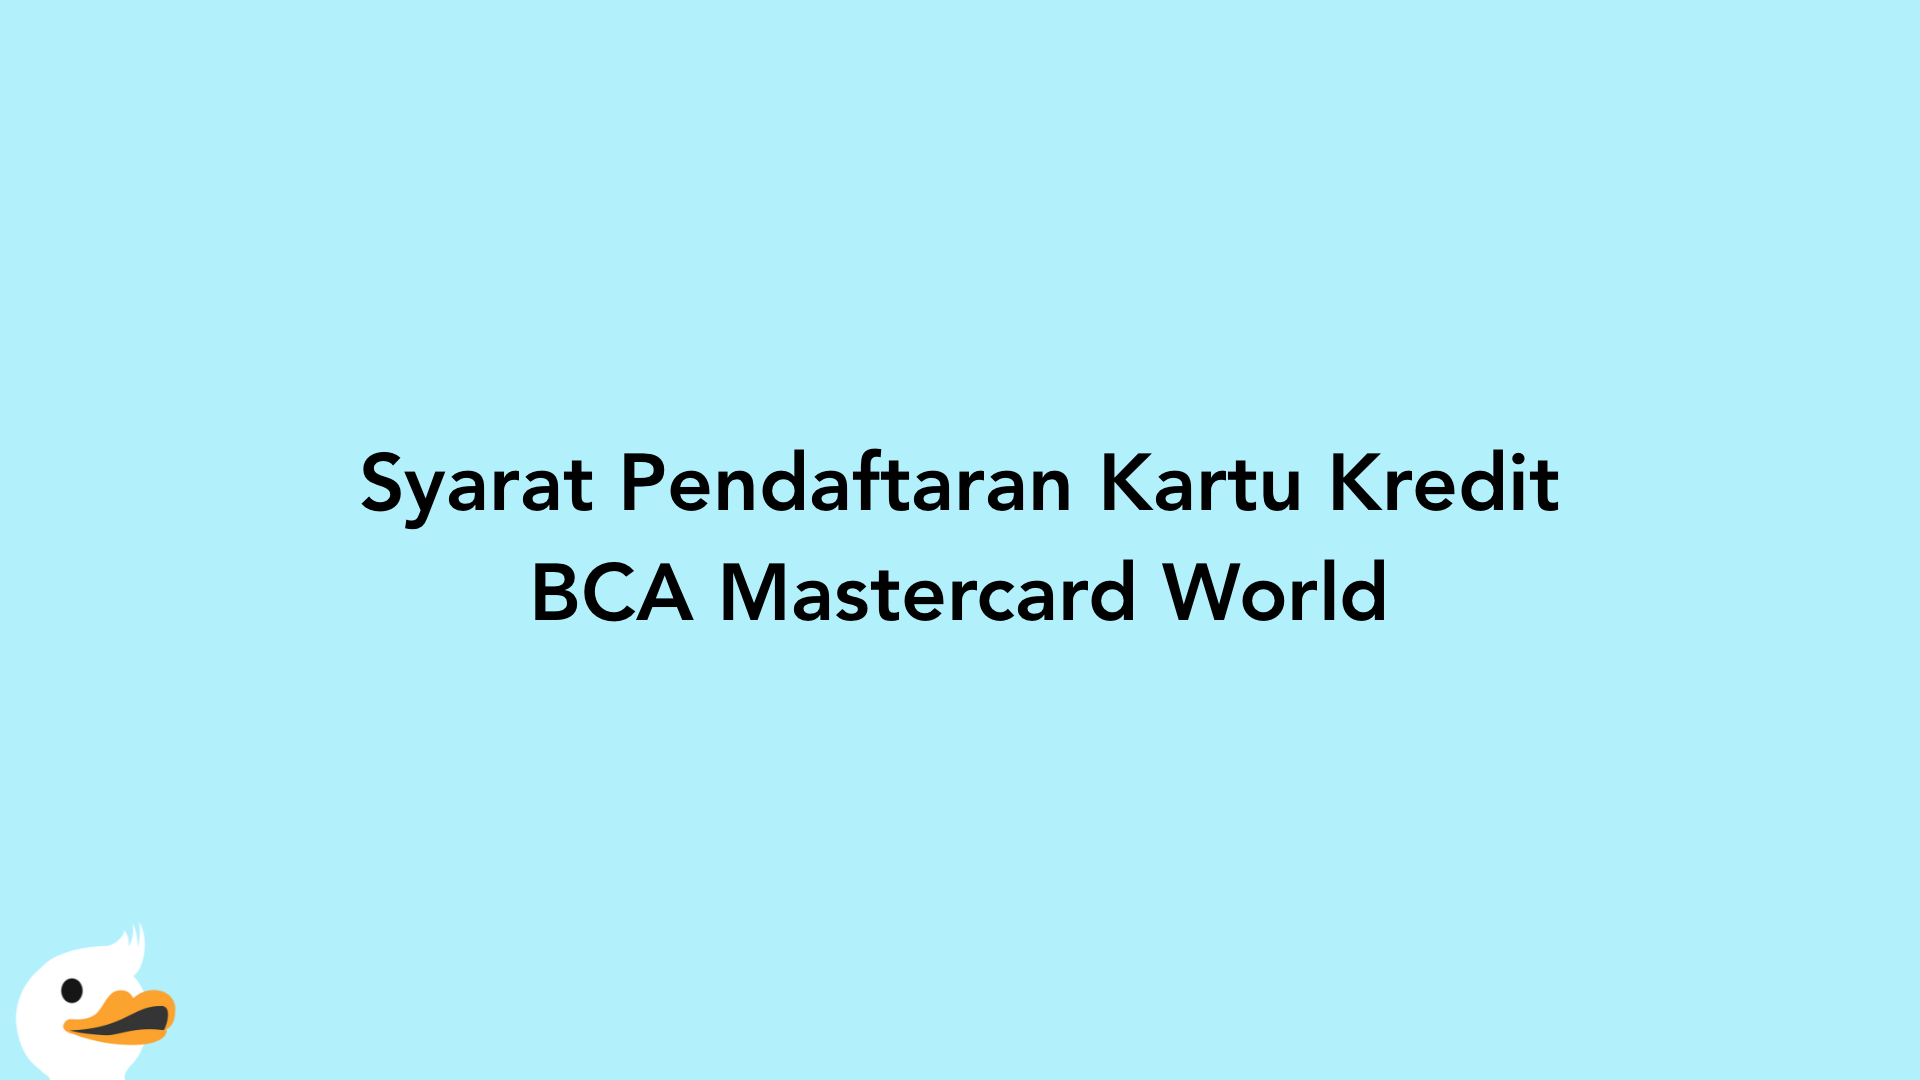 Syarat Pendaftaran Kartu Kredit BCA Mastercard World